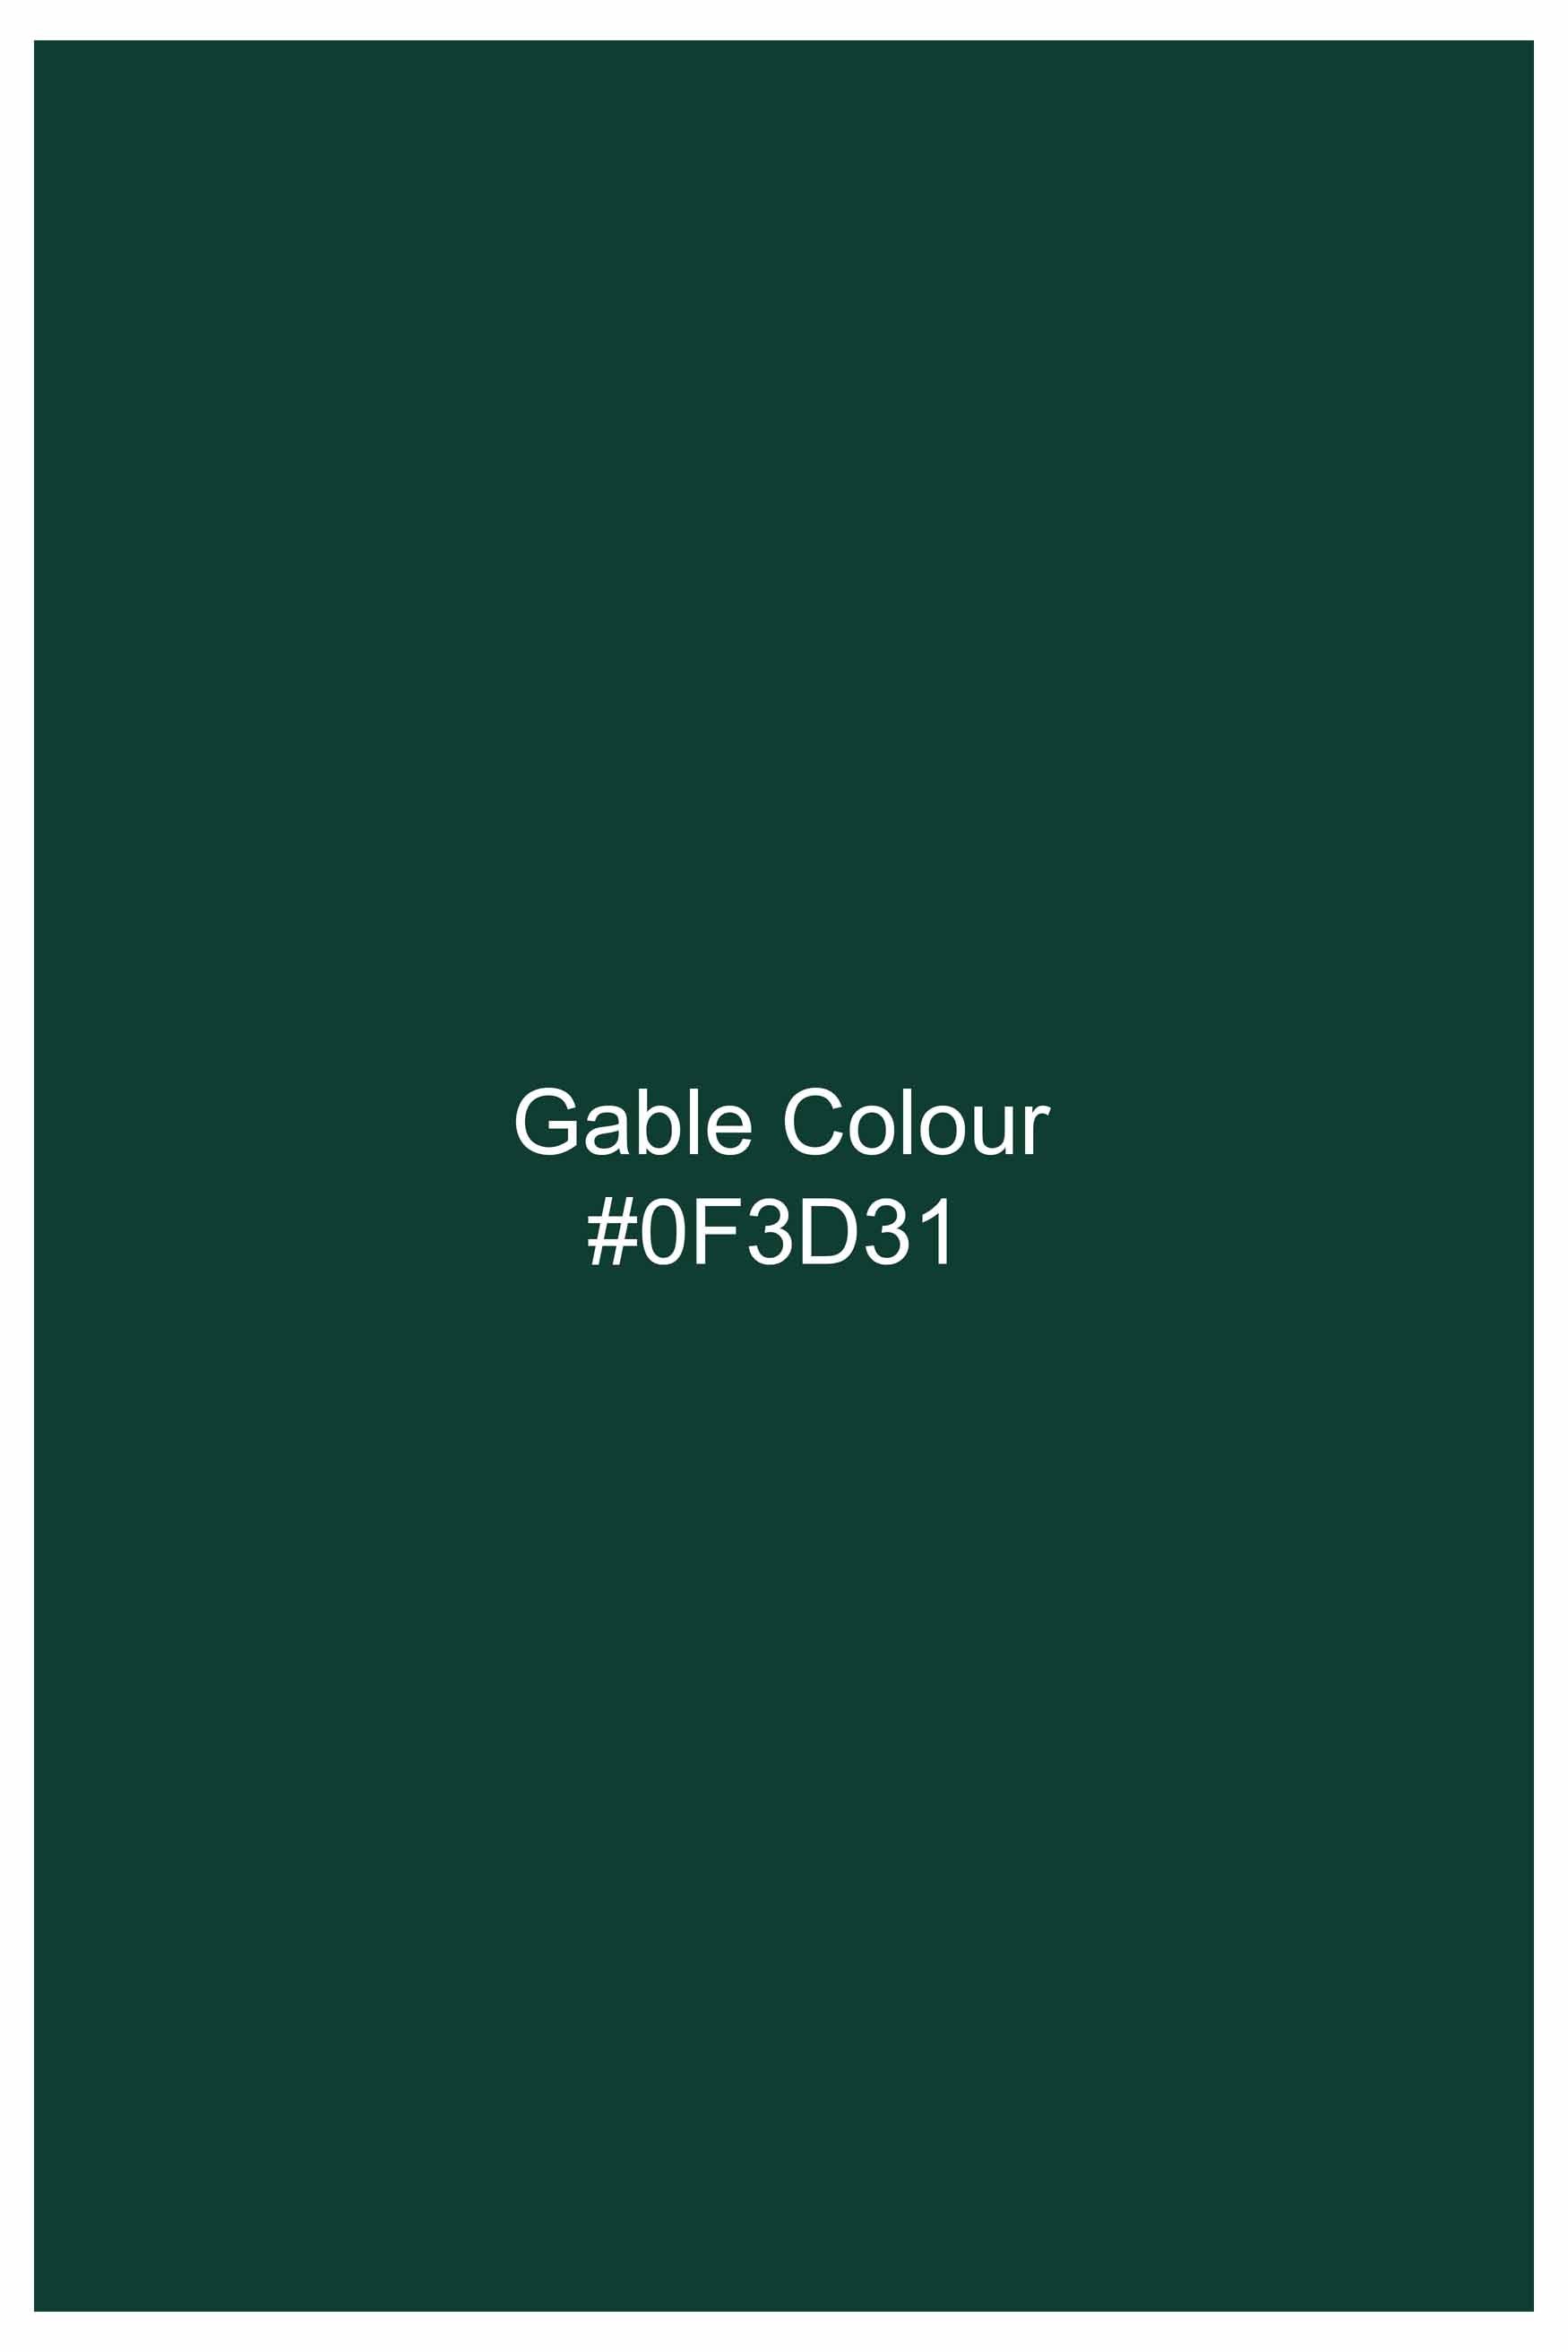 Gable Green Hand Painted Subtle Sheen Super Soft Premium Cotton Designer Shirt 8859-BLK-ART-38, 8859-BLK-ART-H-38, 8859-BLK-ART-39, 8859-BLK-ART-H-39, 8859-BLK-ART-40, 8859-BLK-ART-H-40, 8859-BLK-ART-42, 8859-BLK-ART-H-42, 8859-BLK-ART-44, 8859-BLK-ART-H-44, 8859-BLK-ART-46, 8859-BLK-ART-H-46, 8859-BLK-ART-48, 8859-BLK-ART-H-48, 8859-BLK-ART-50, 8859-BLK-ART-H-50, 8859-BLK-ART-52, 8859-BLK-ART-H-52